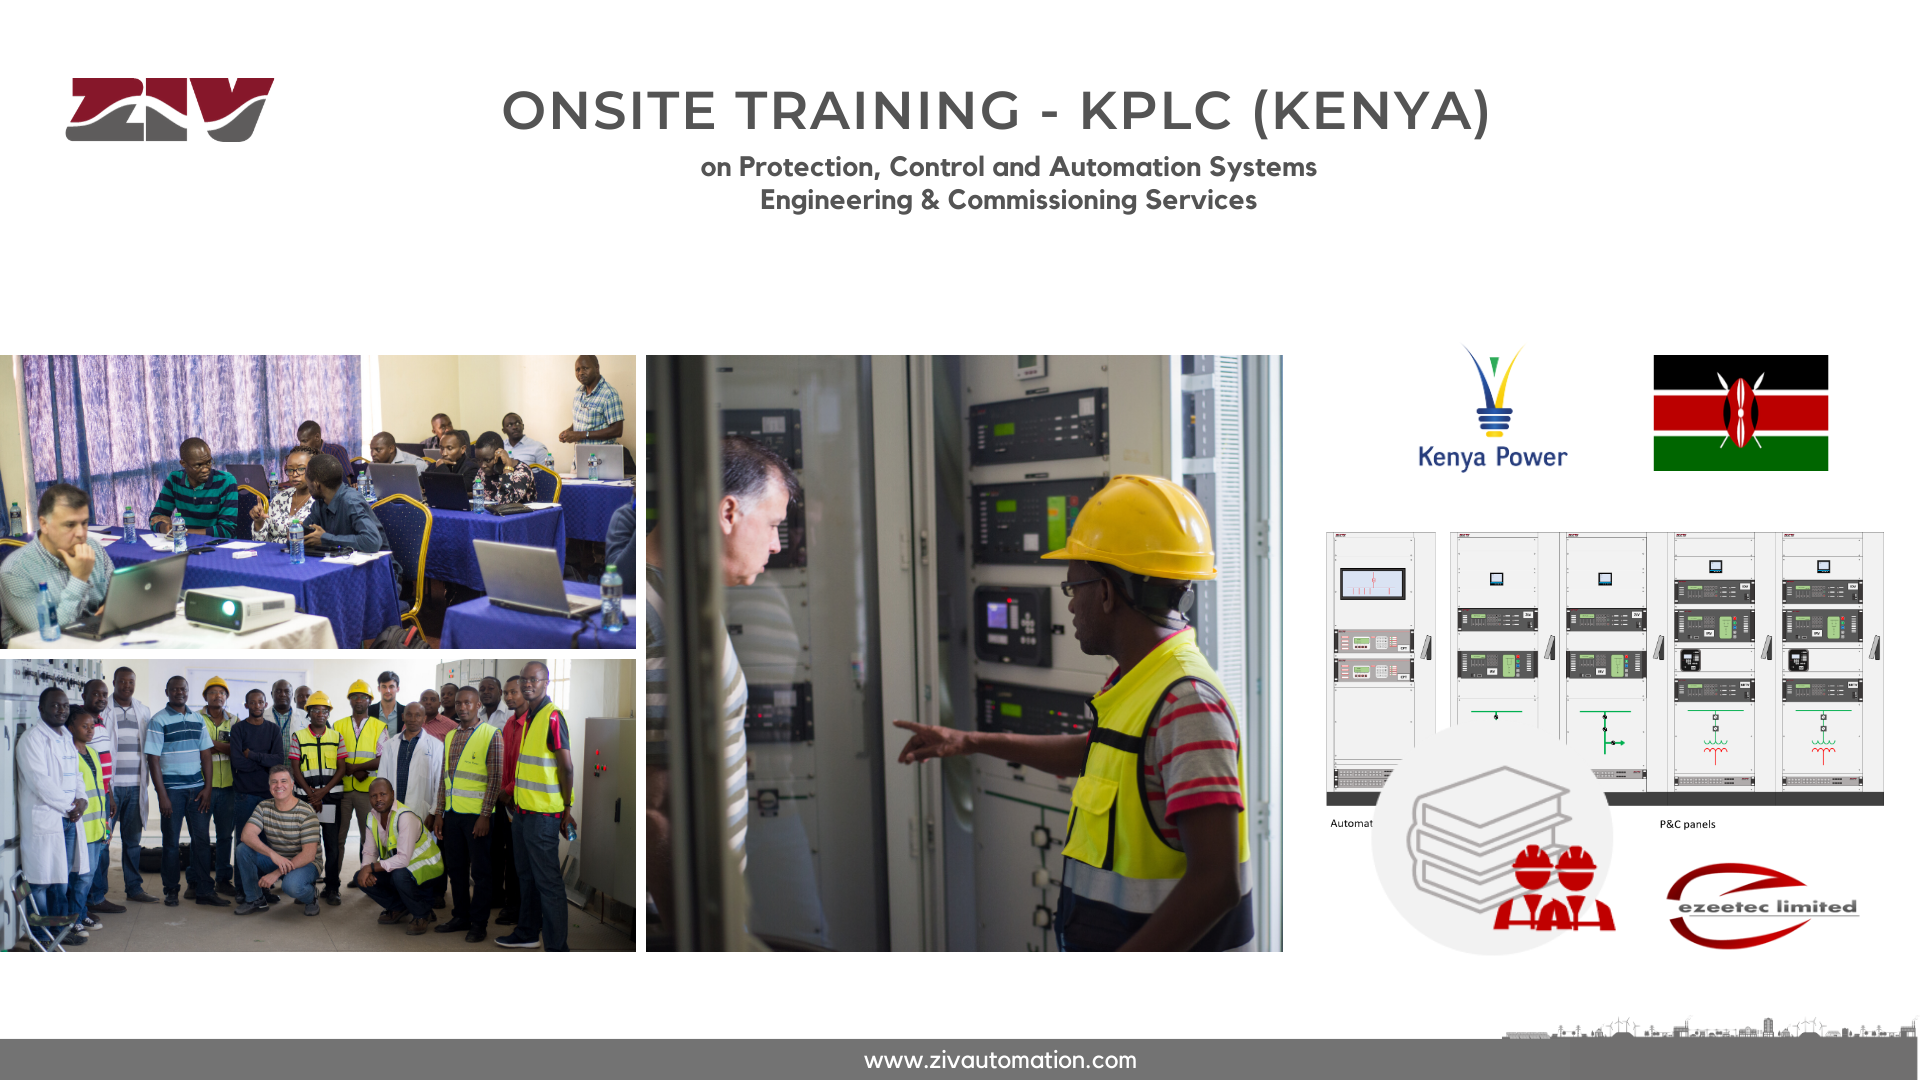 KPLC - ONSITE TRAINING IN KENYA WITH ZIV AND EZEETEC